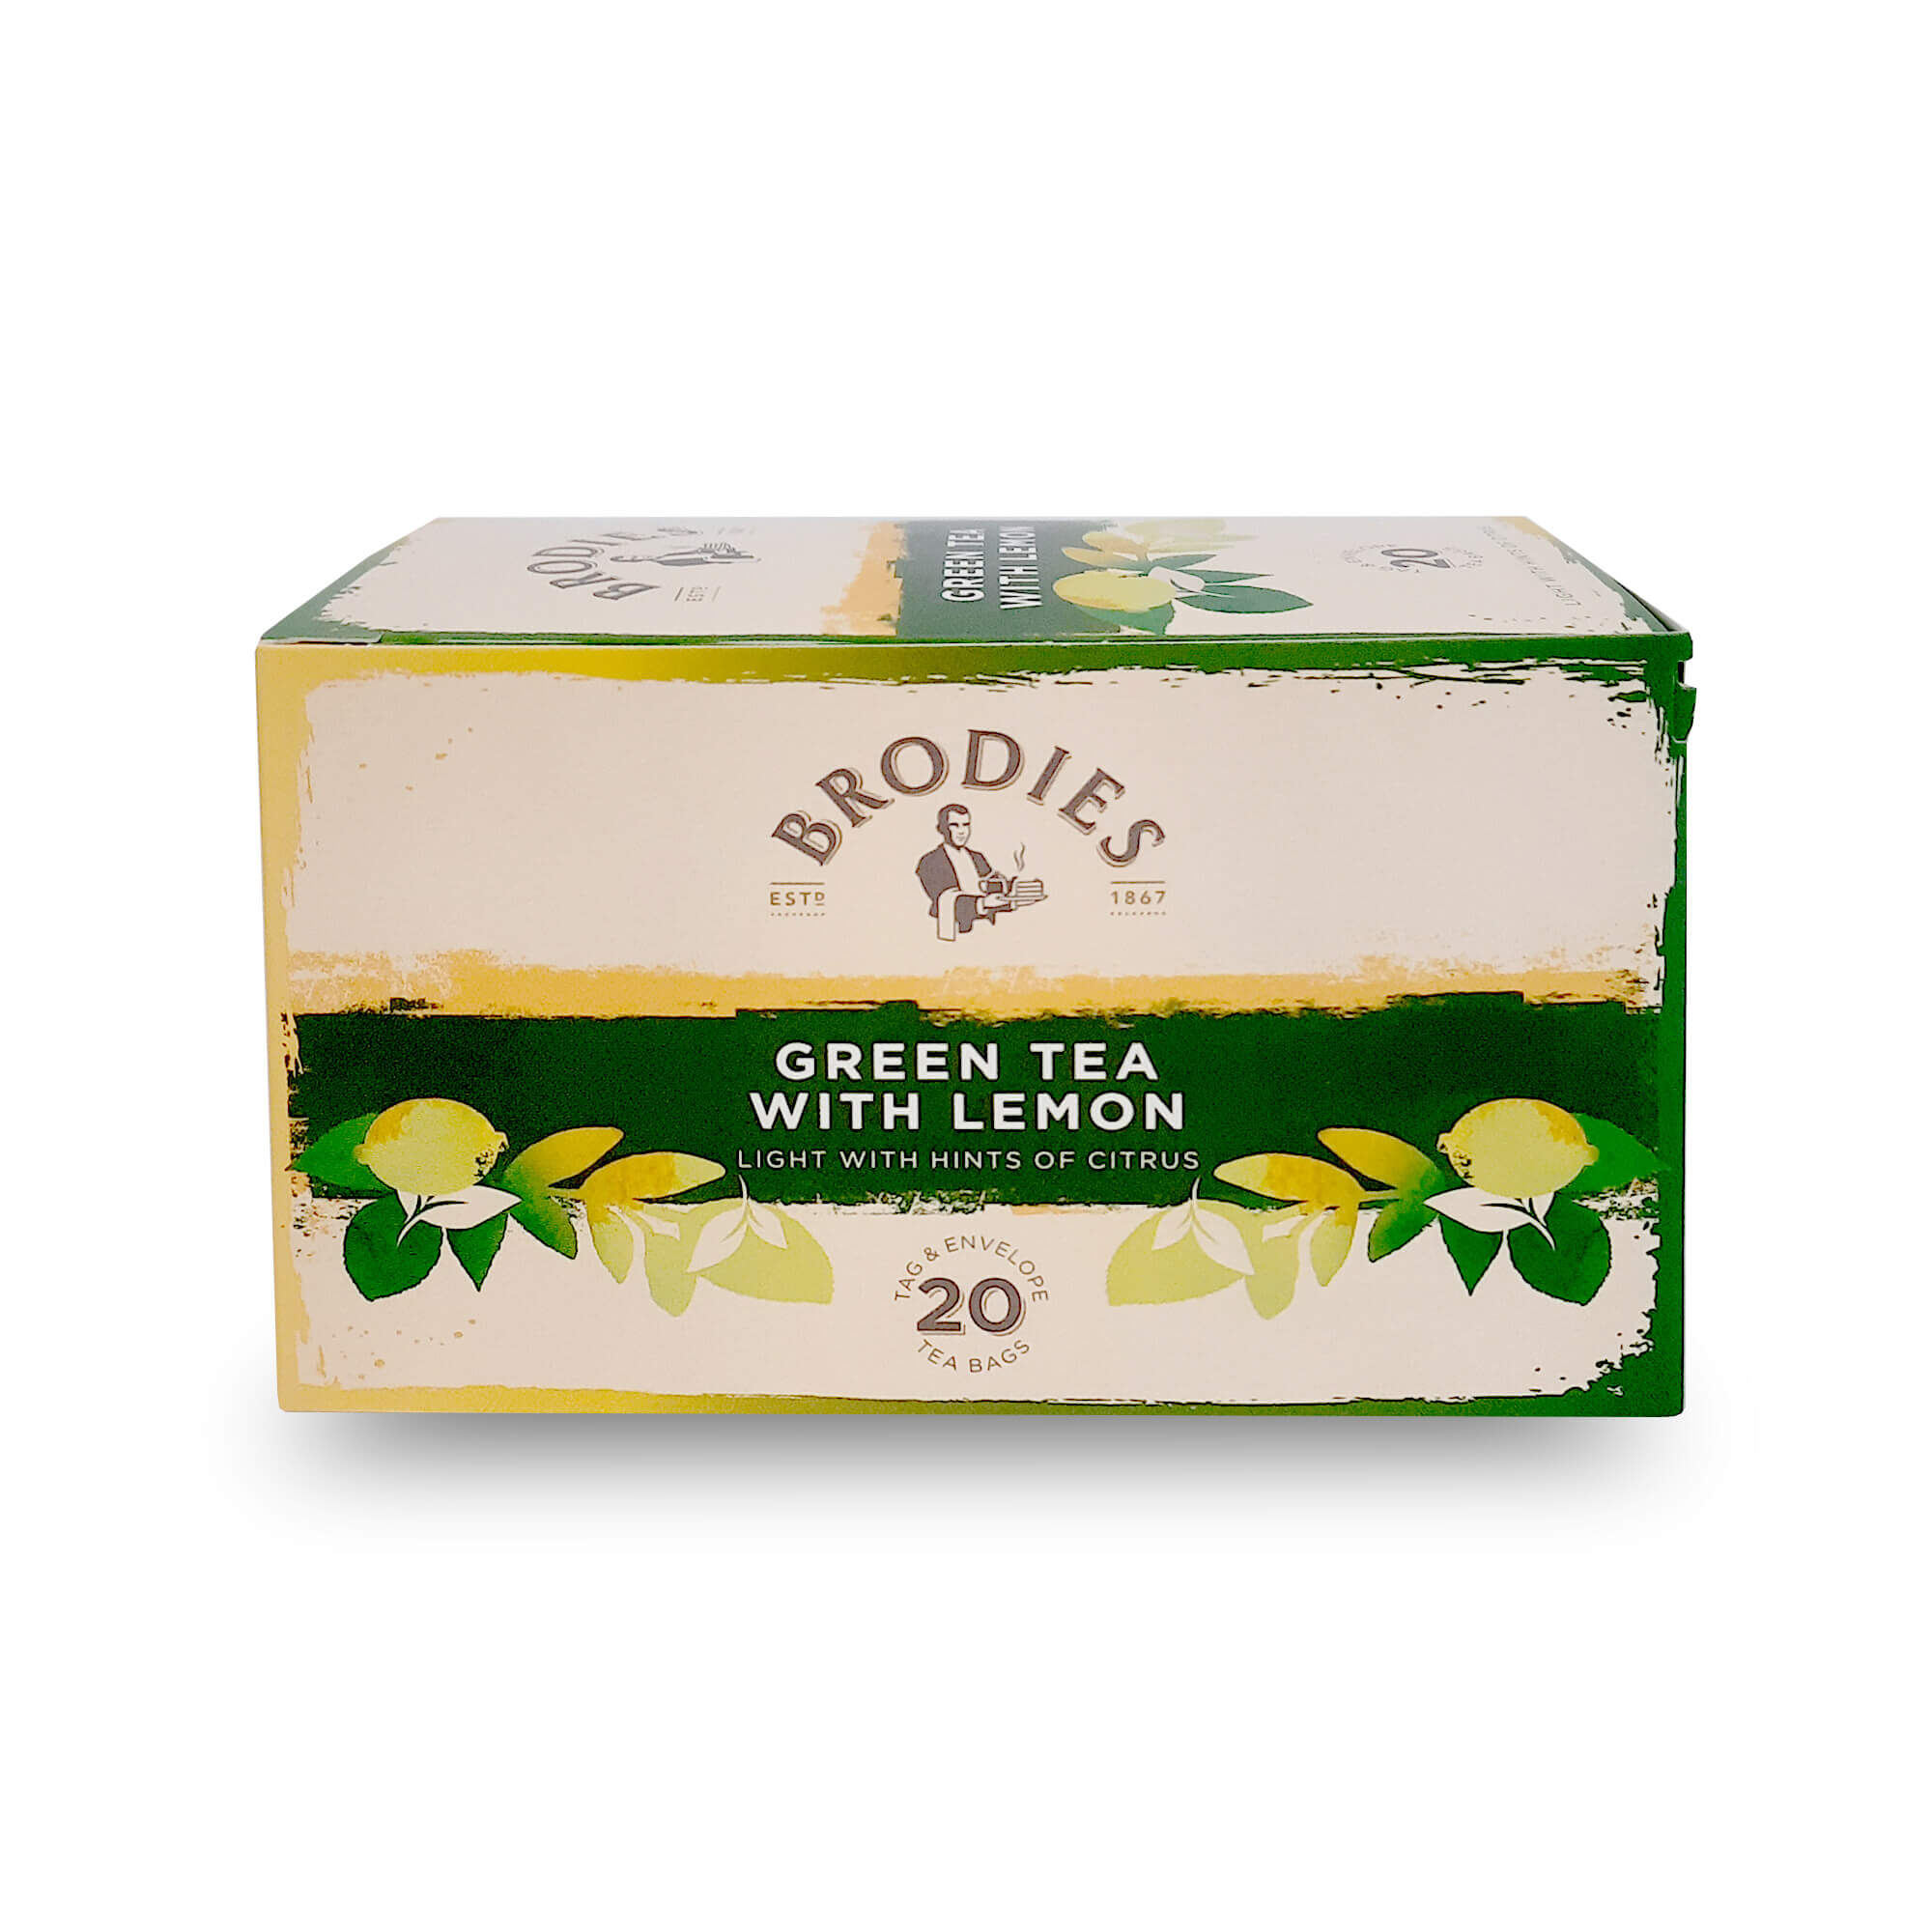 Brodies Green Tea with Lemon 2g X 20's